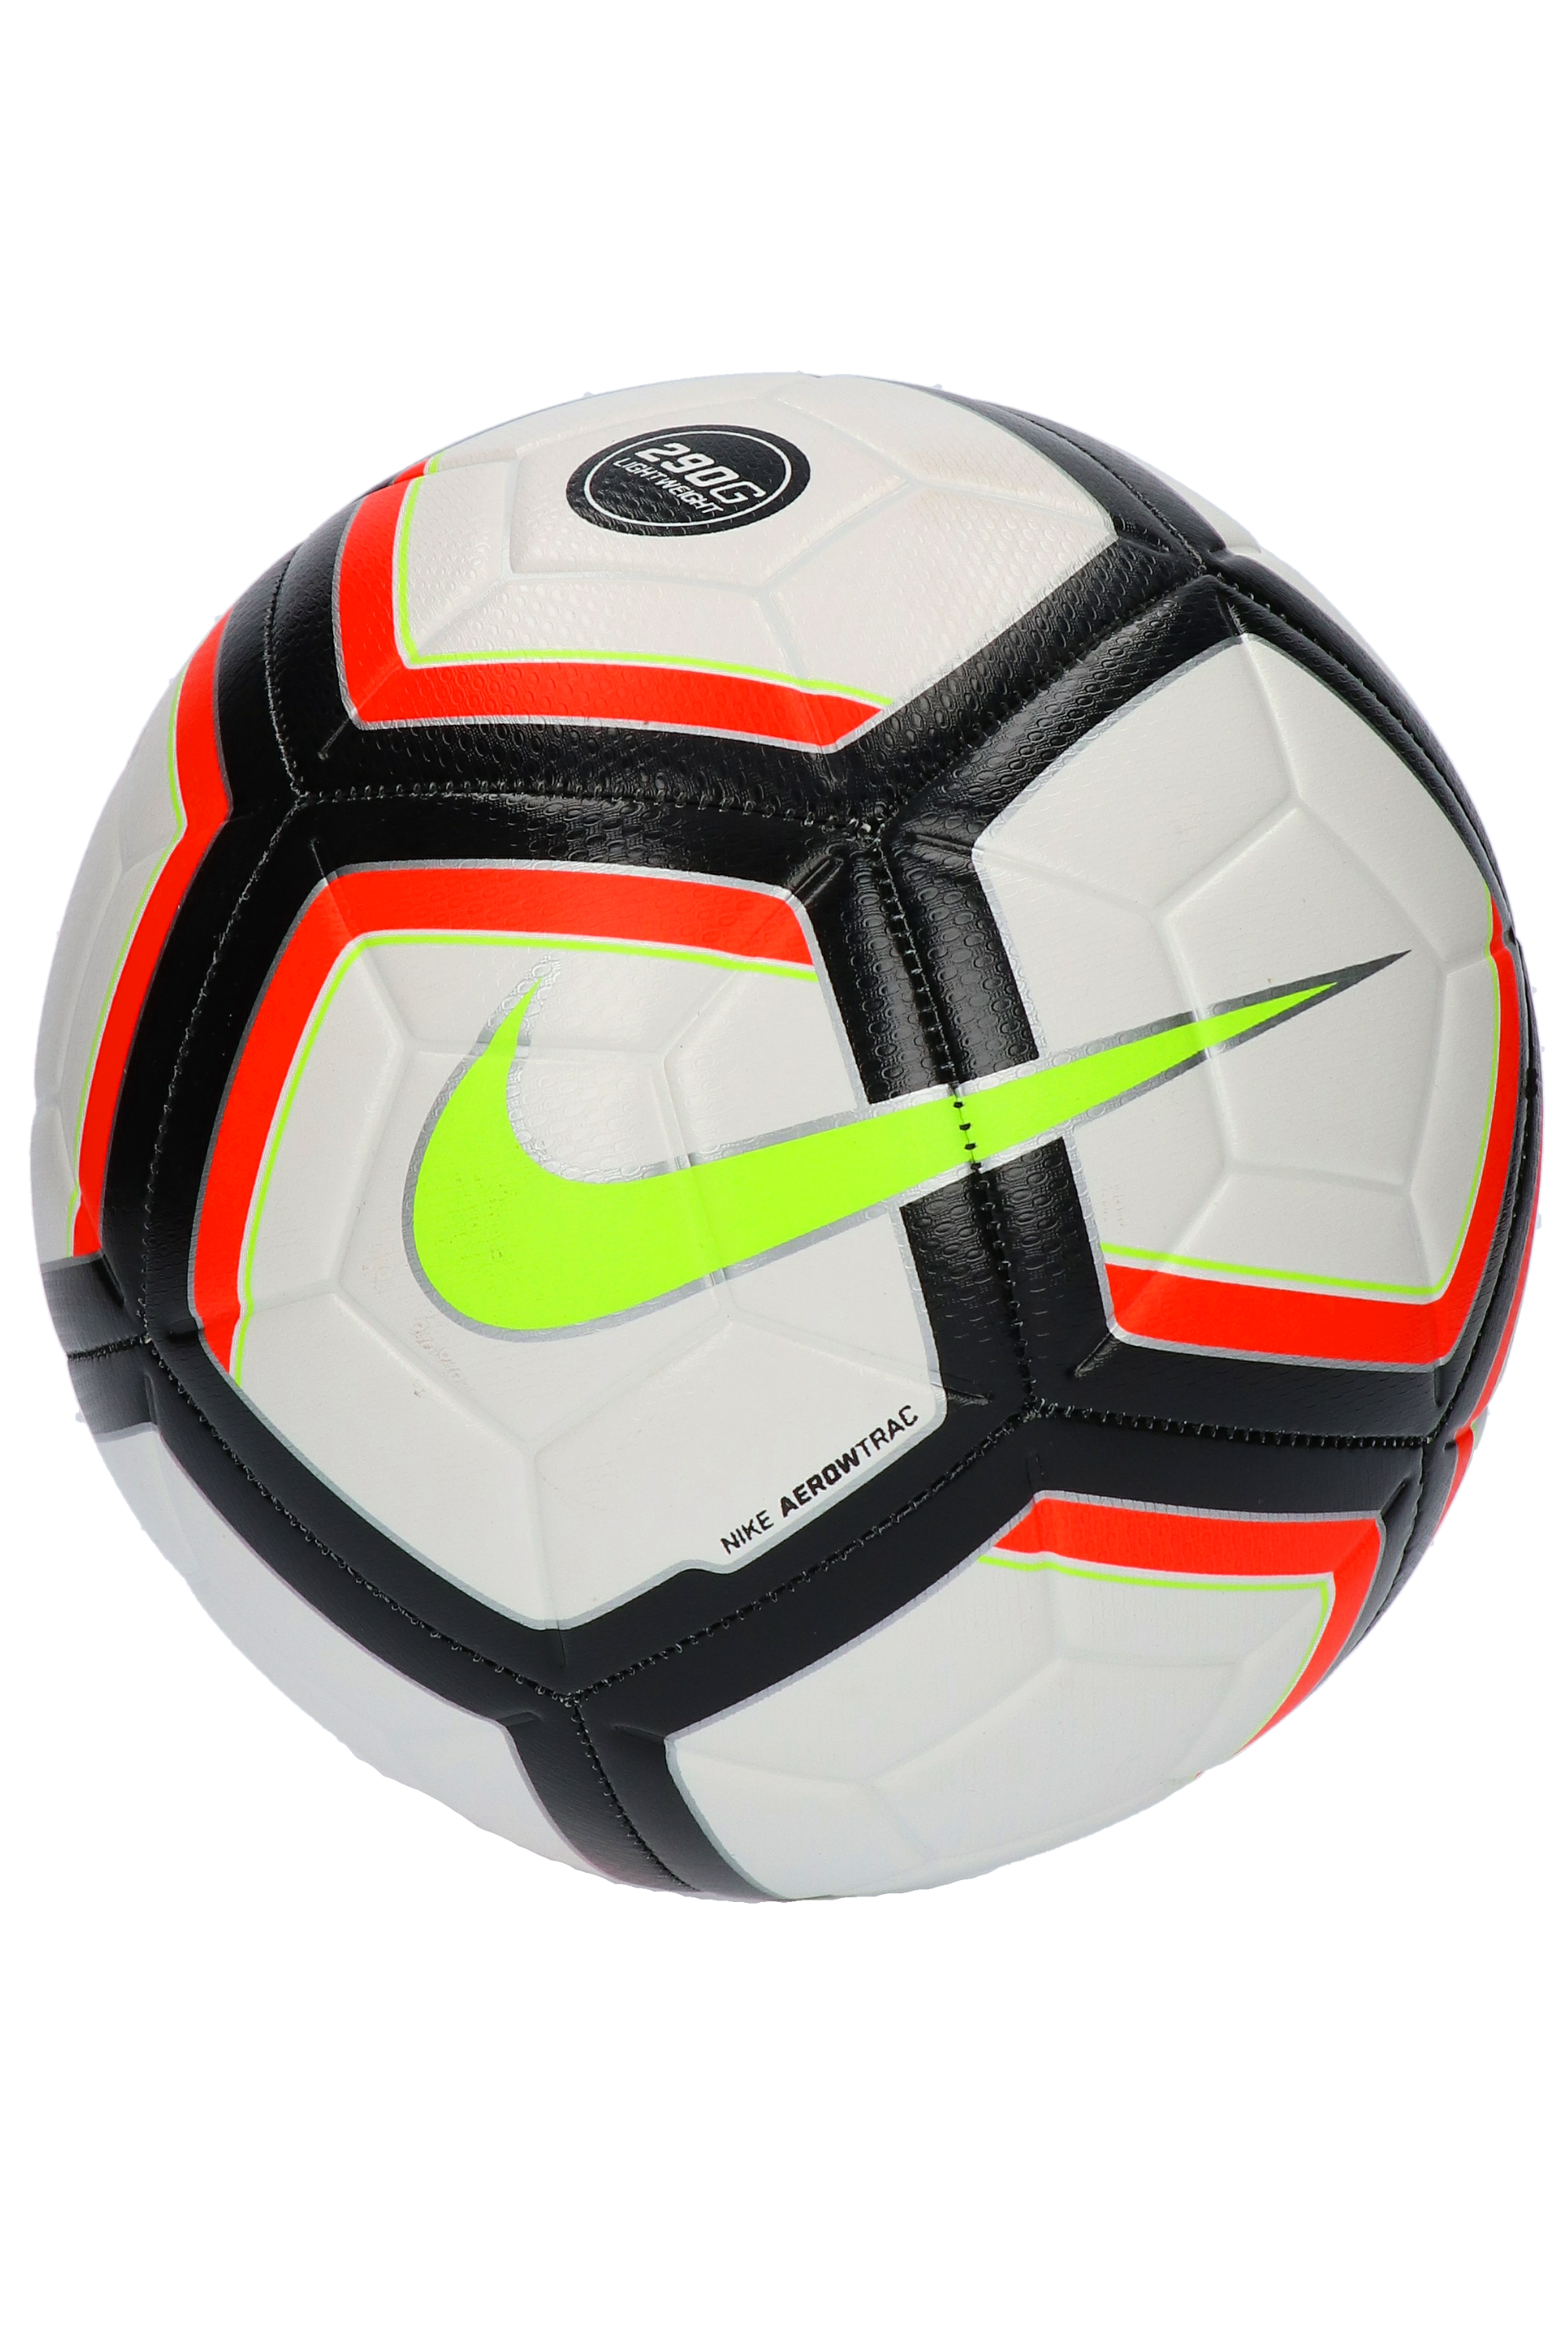 Ball Nike Strike Team 290g size 5 | R 